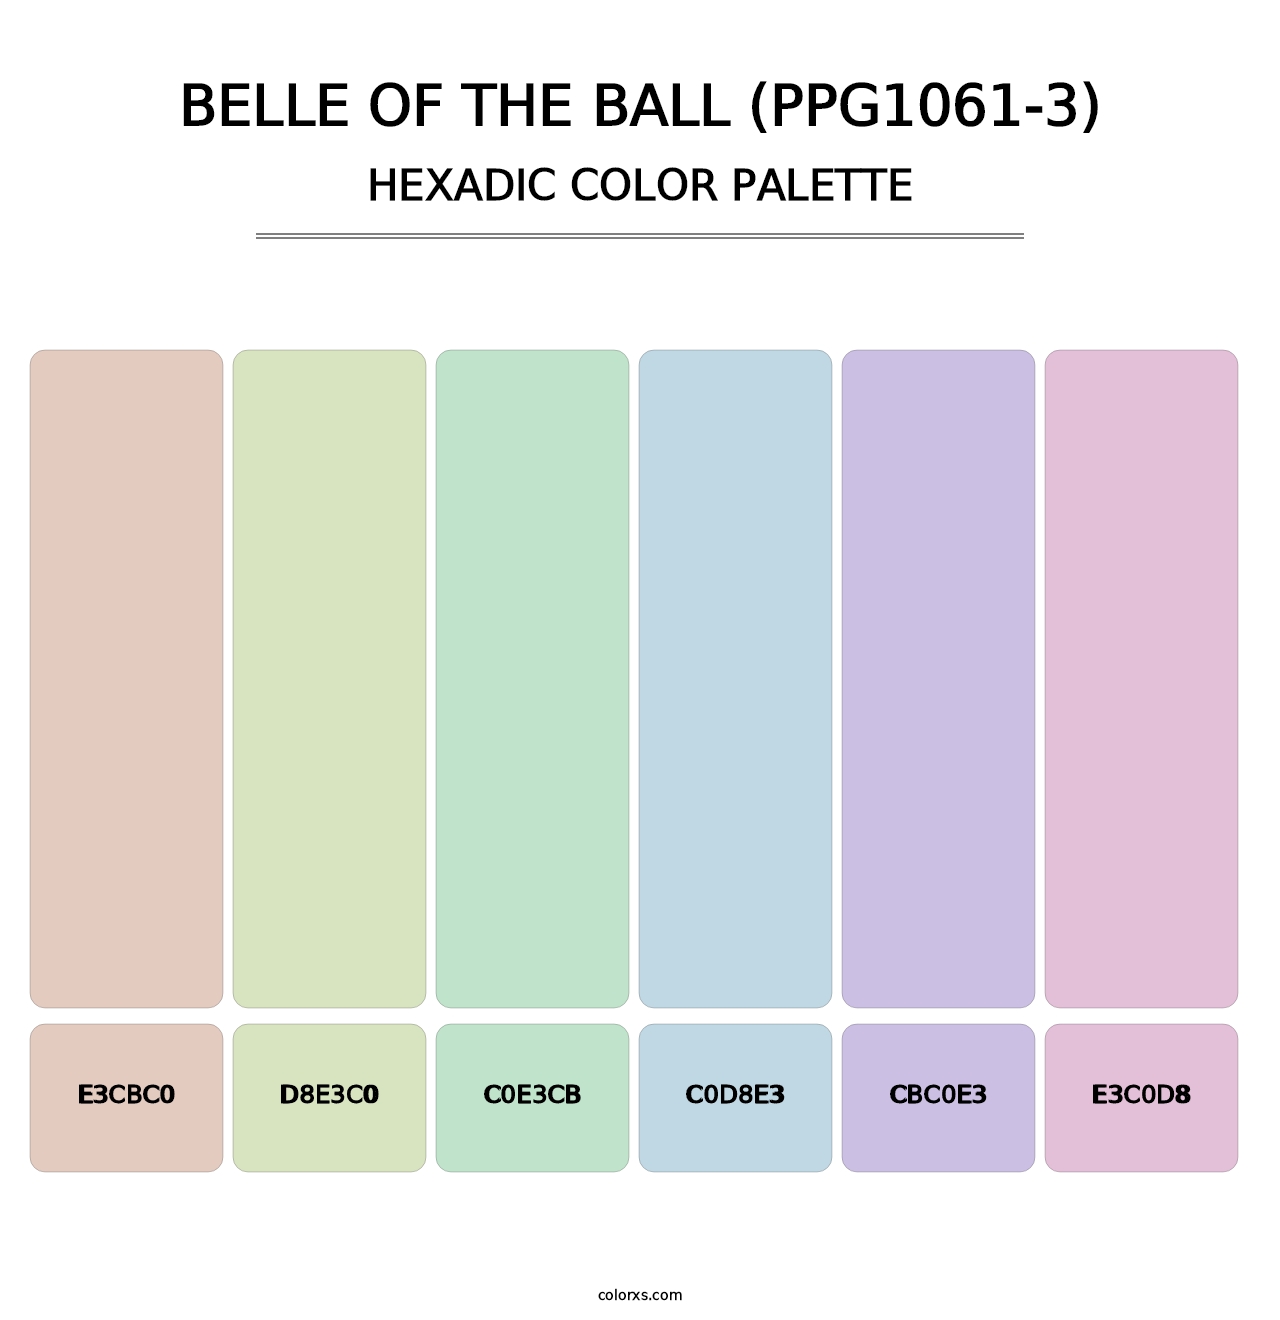 Belle Of The Ball (PPG1061-3) - Hexadic Color Palette